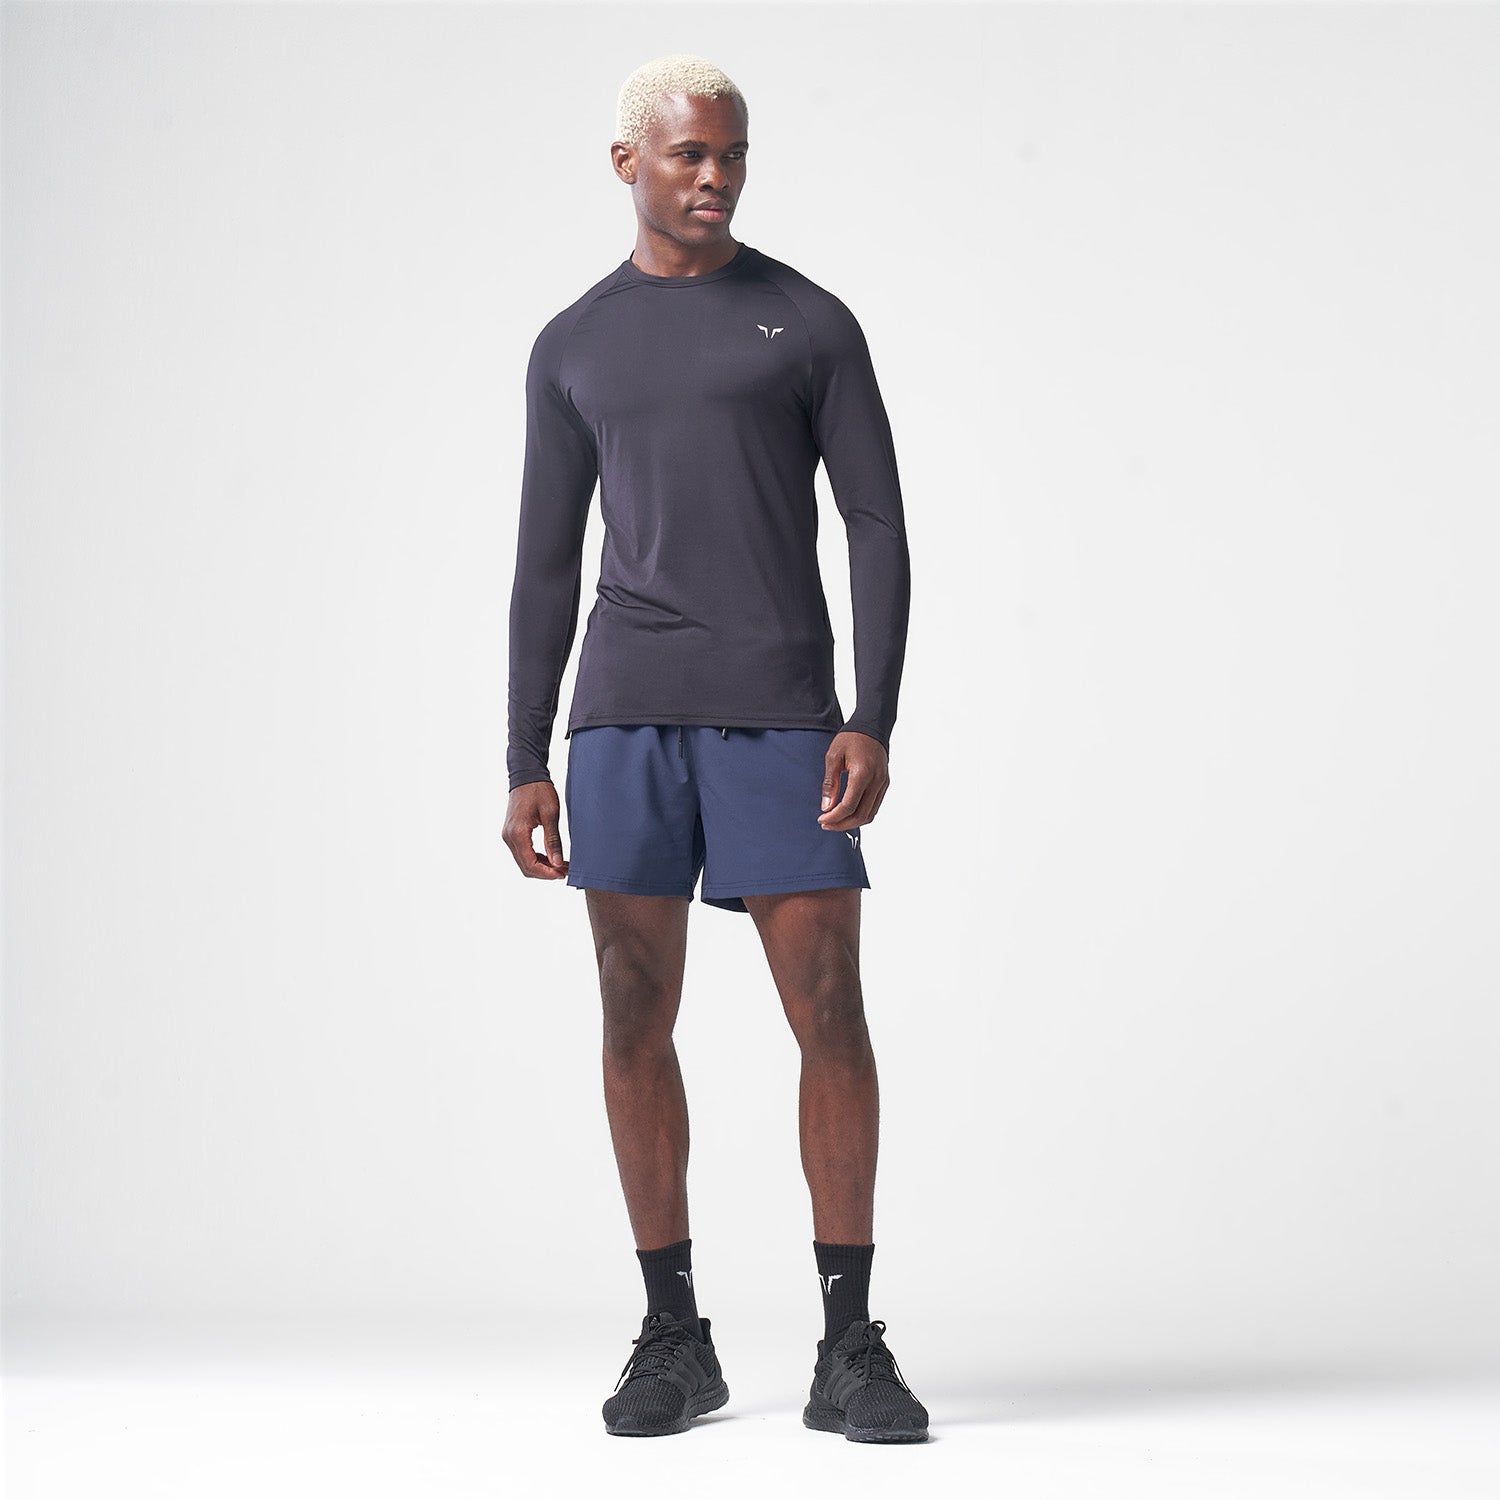 AE | Essential Ultralight Full Sleeves Tee - Black | Gym T-Shirts Men ...